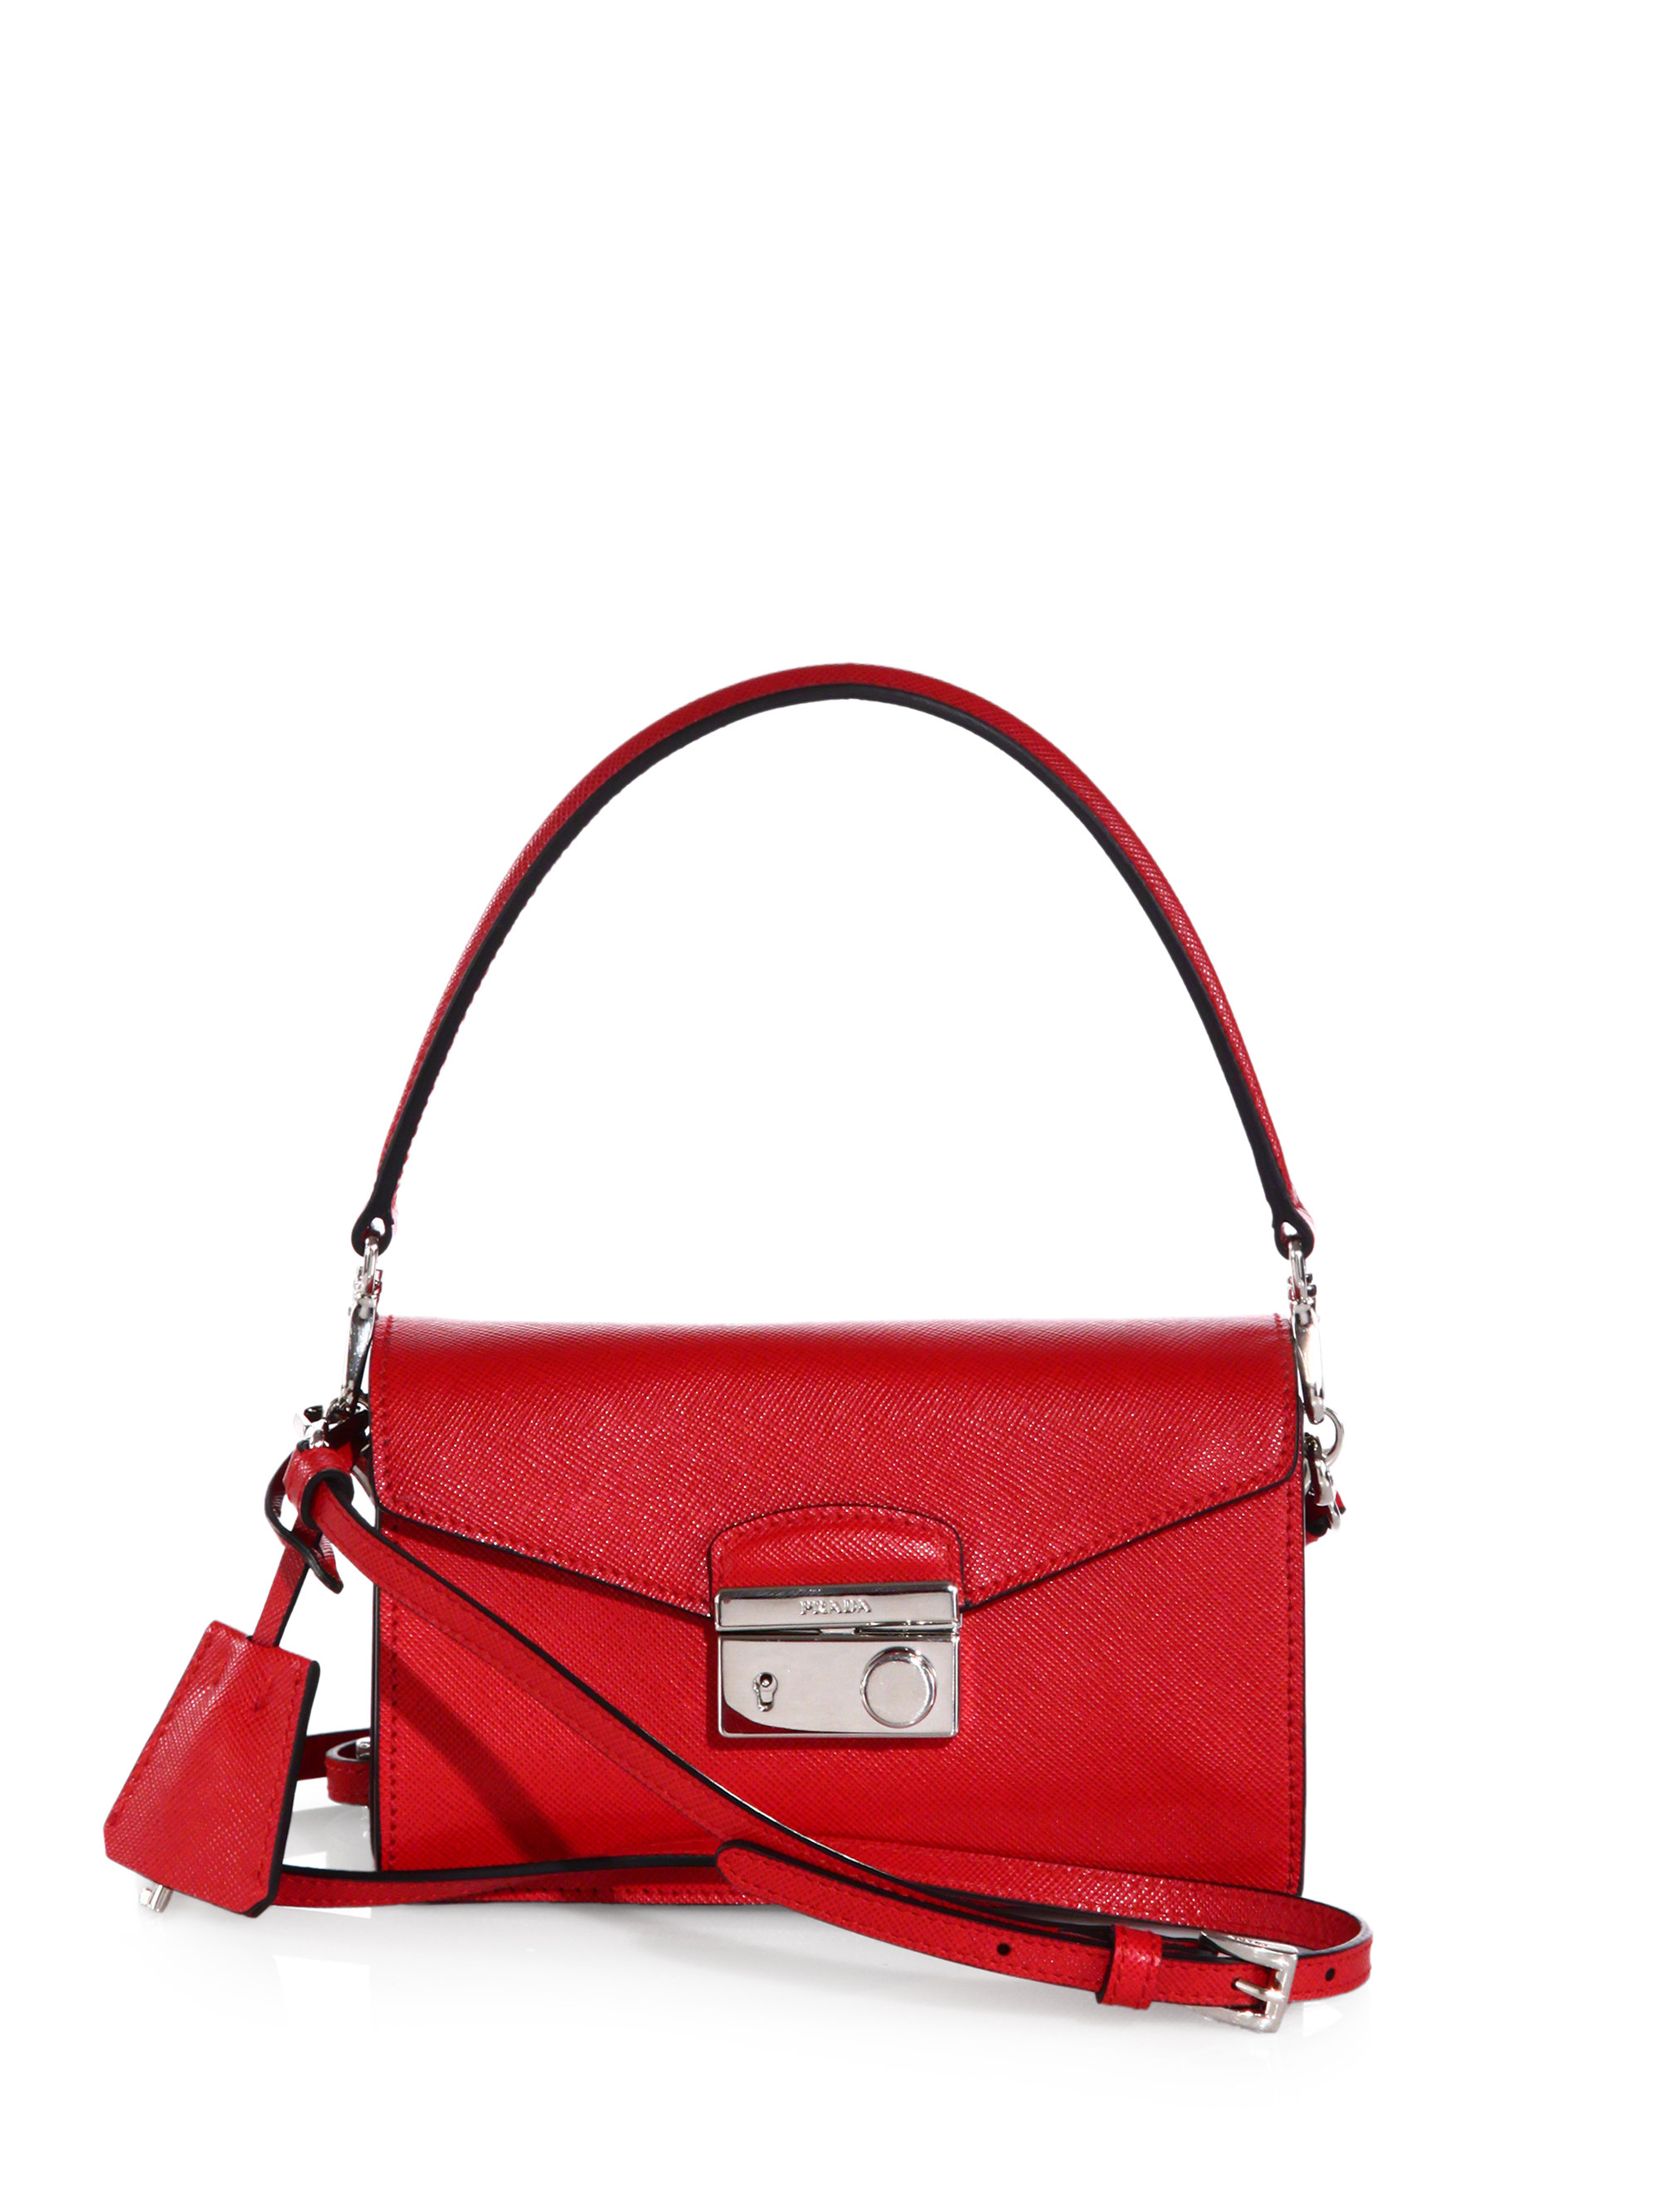 Prada Saffiano Leather Mini Sound Crossbody Bag in Red | Lyst